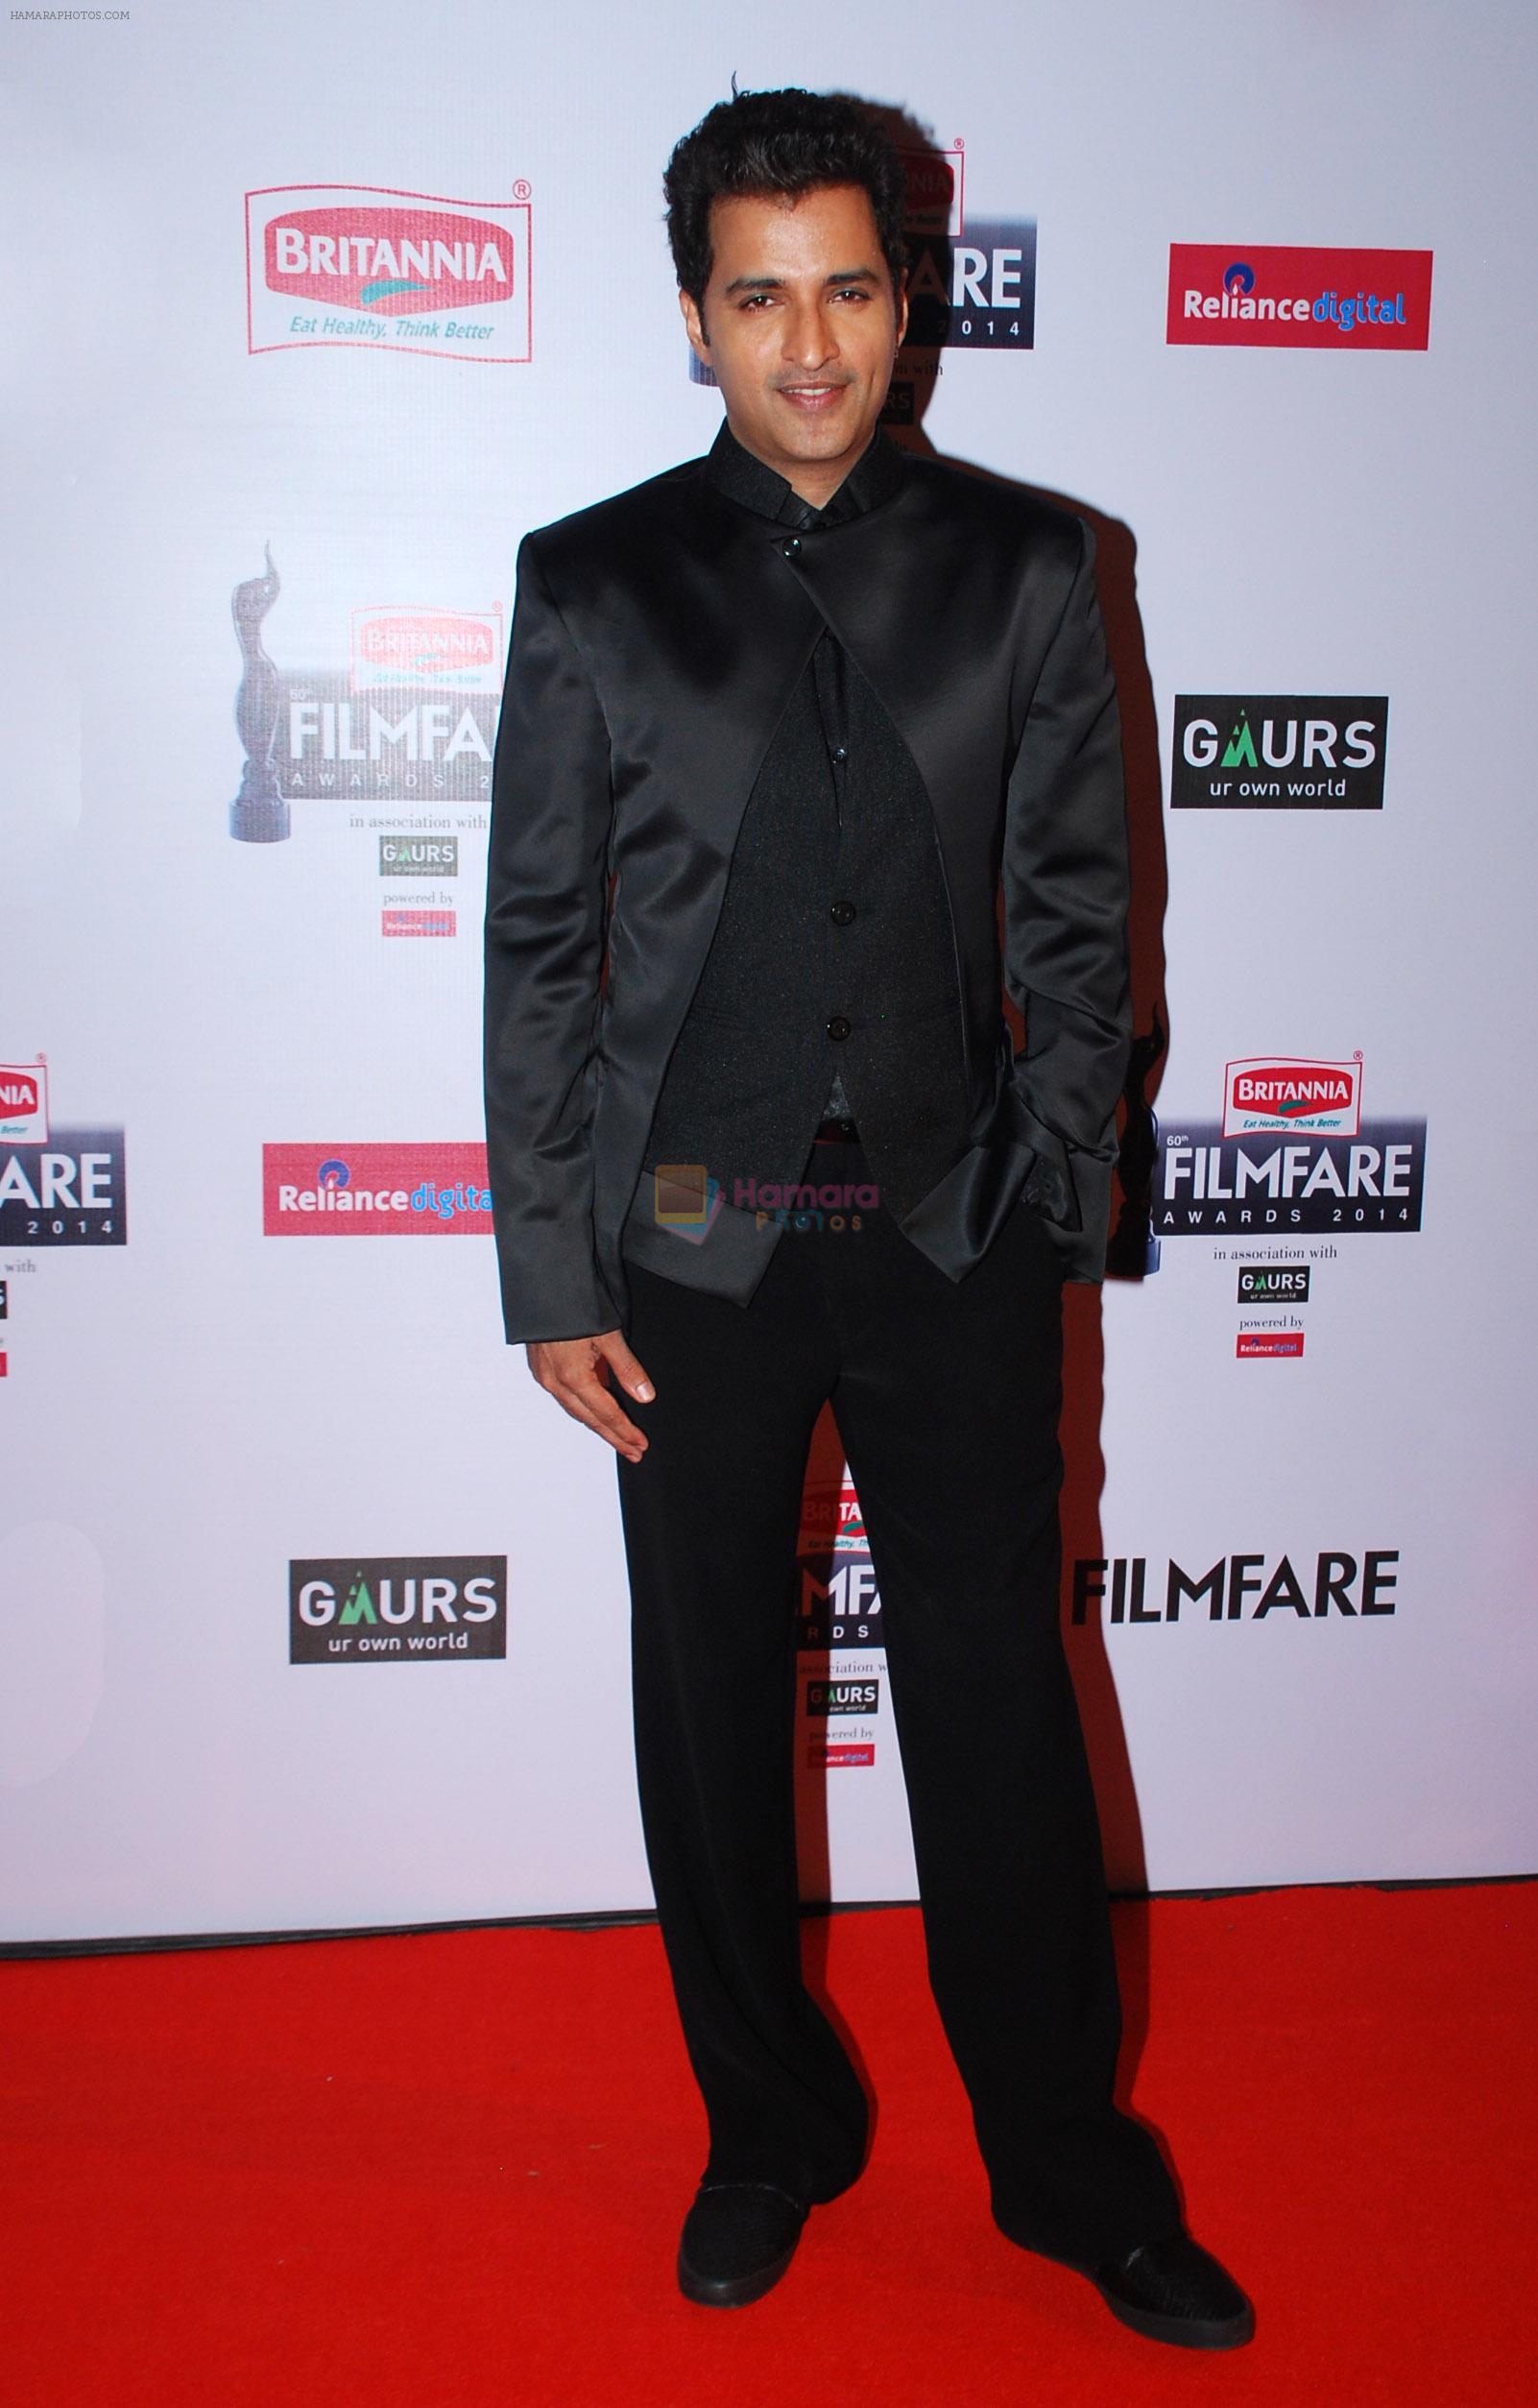 Ganesh Hegde graces the red carpet at the 60th Britannia Filmfare Awards